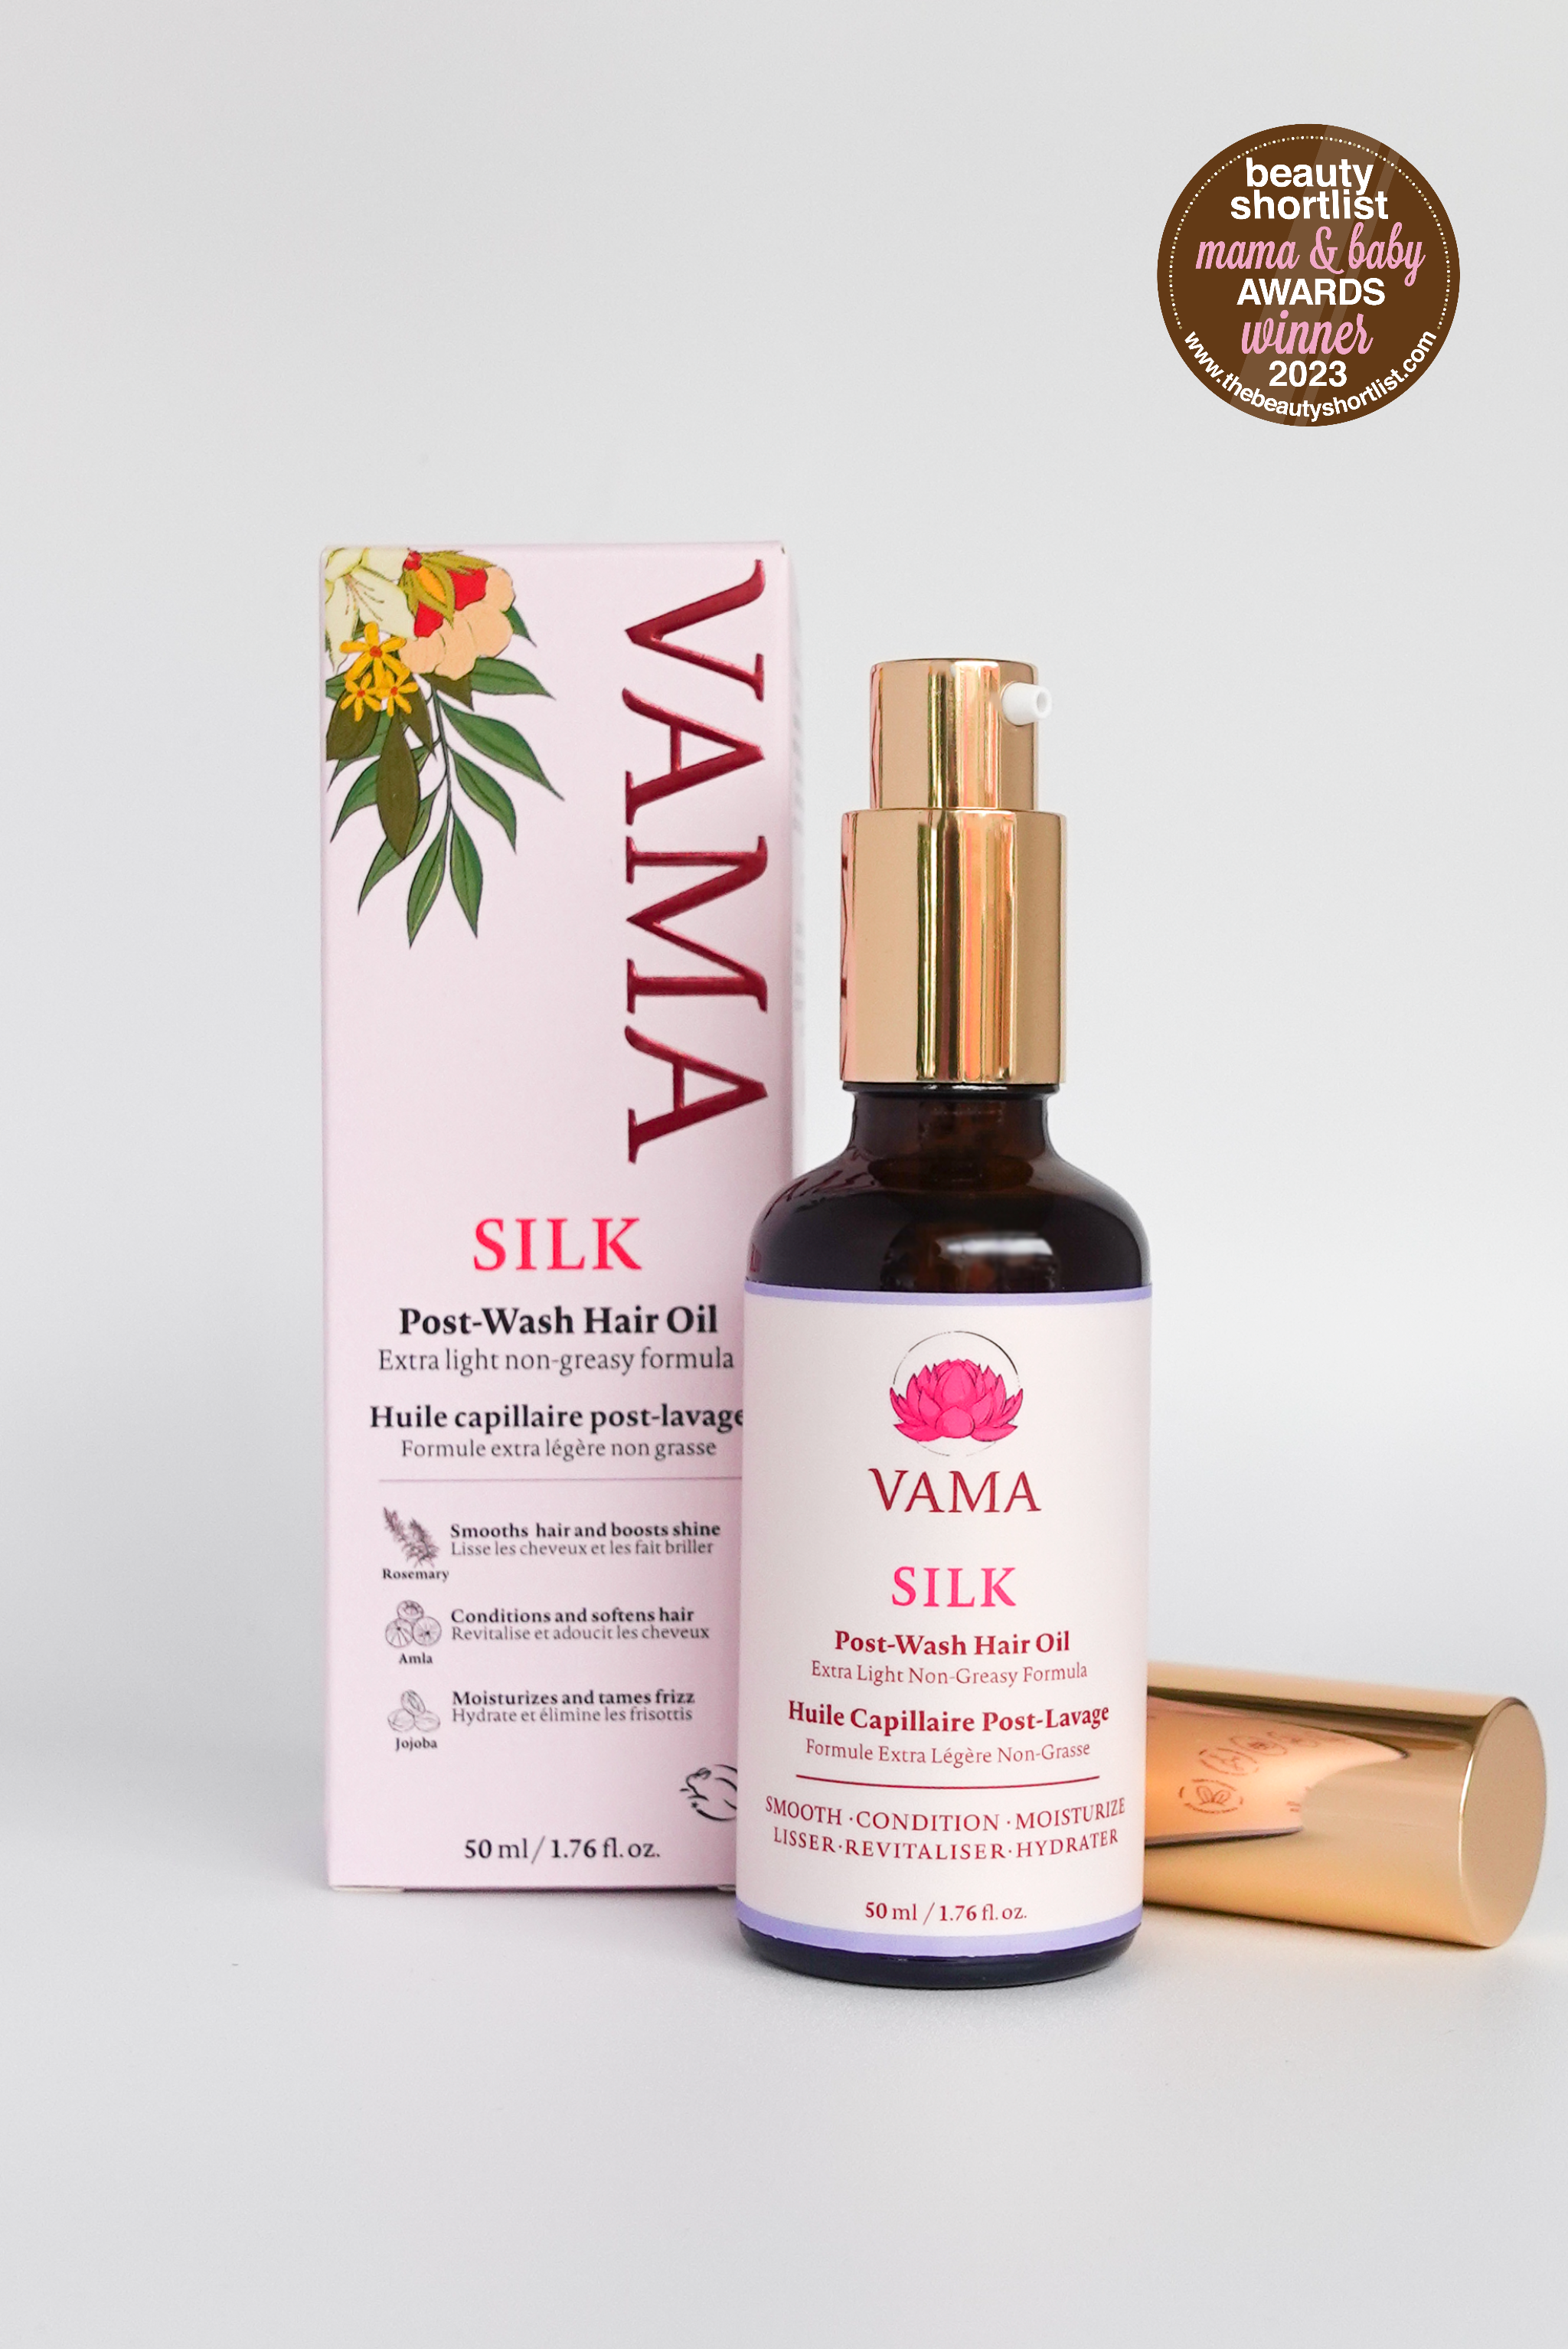 VAMA SILK Post-Wash Hair Oil Treatment - 2 Pack ($84 Value)